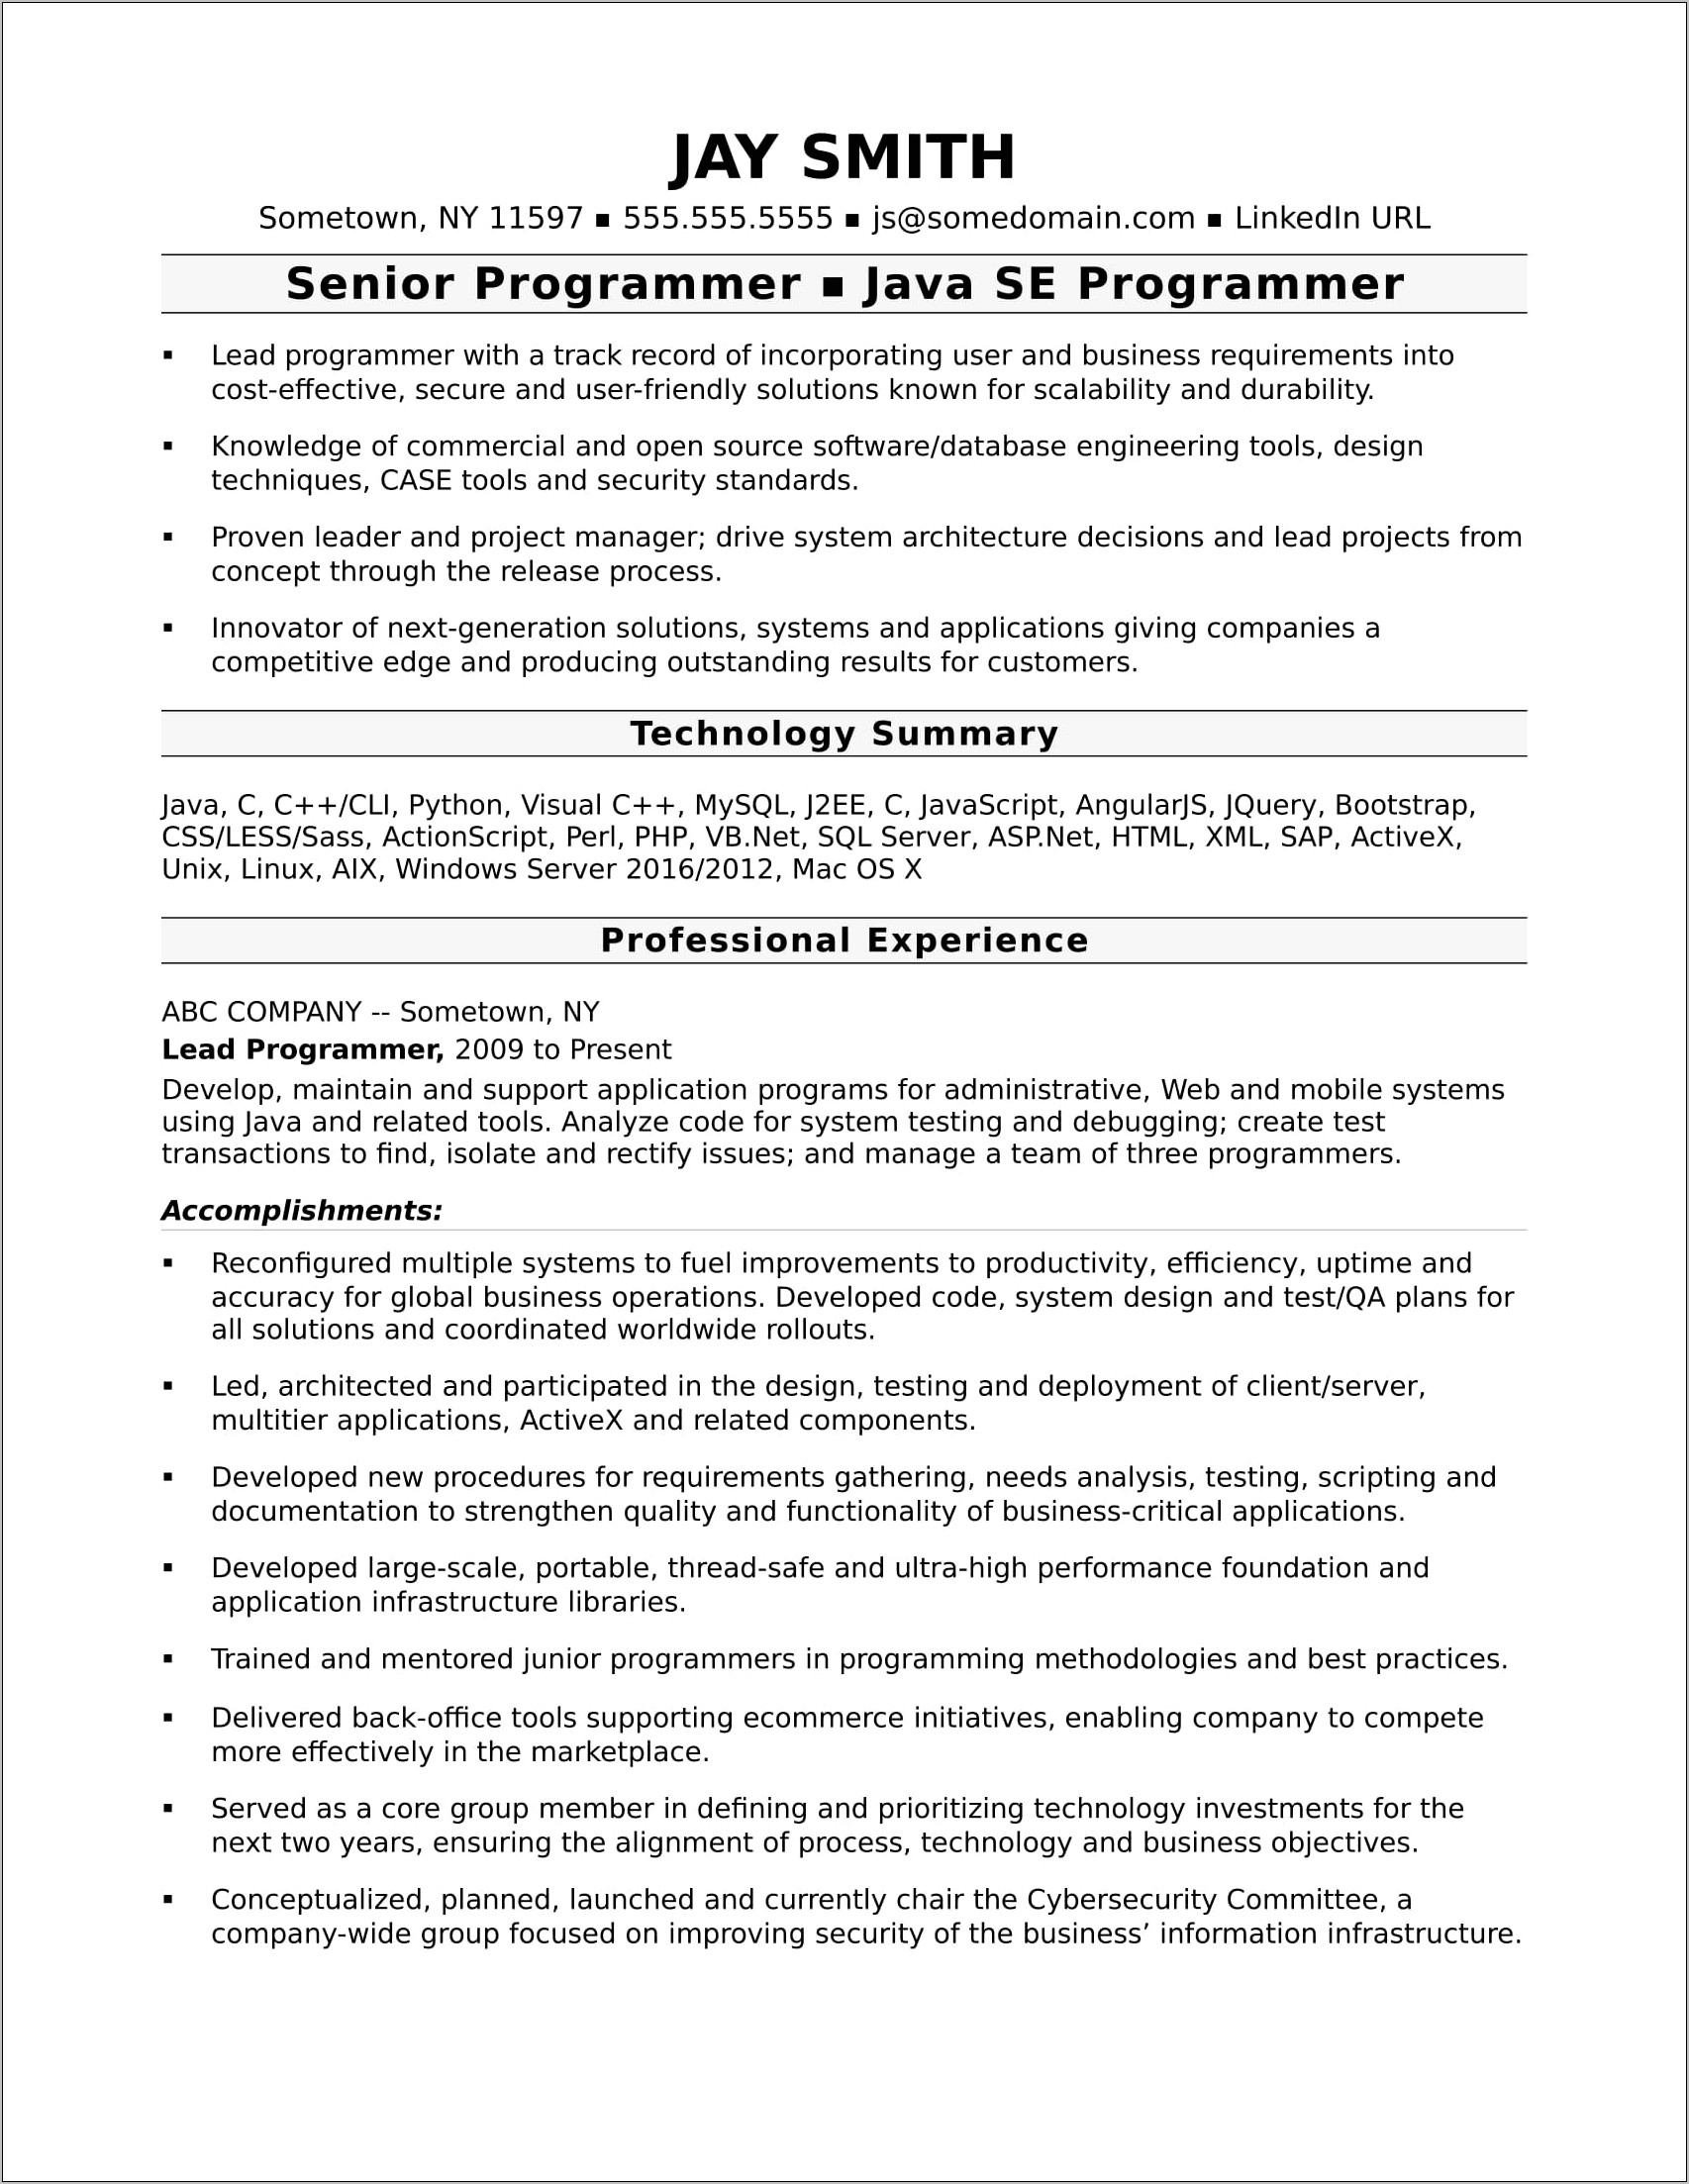 Sample Professional Resume Objective For Java Developer